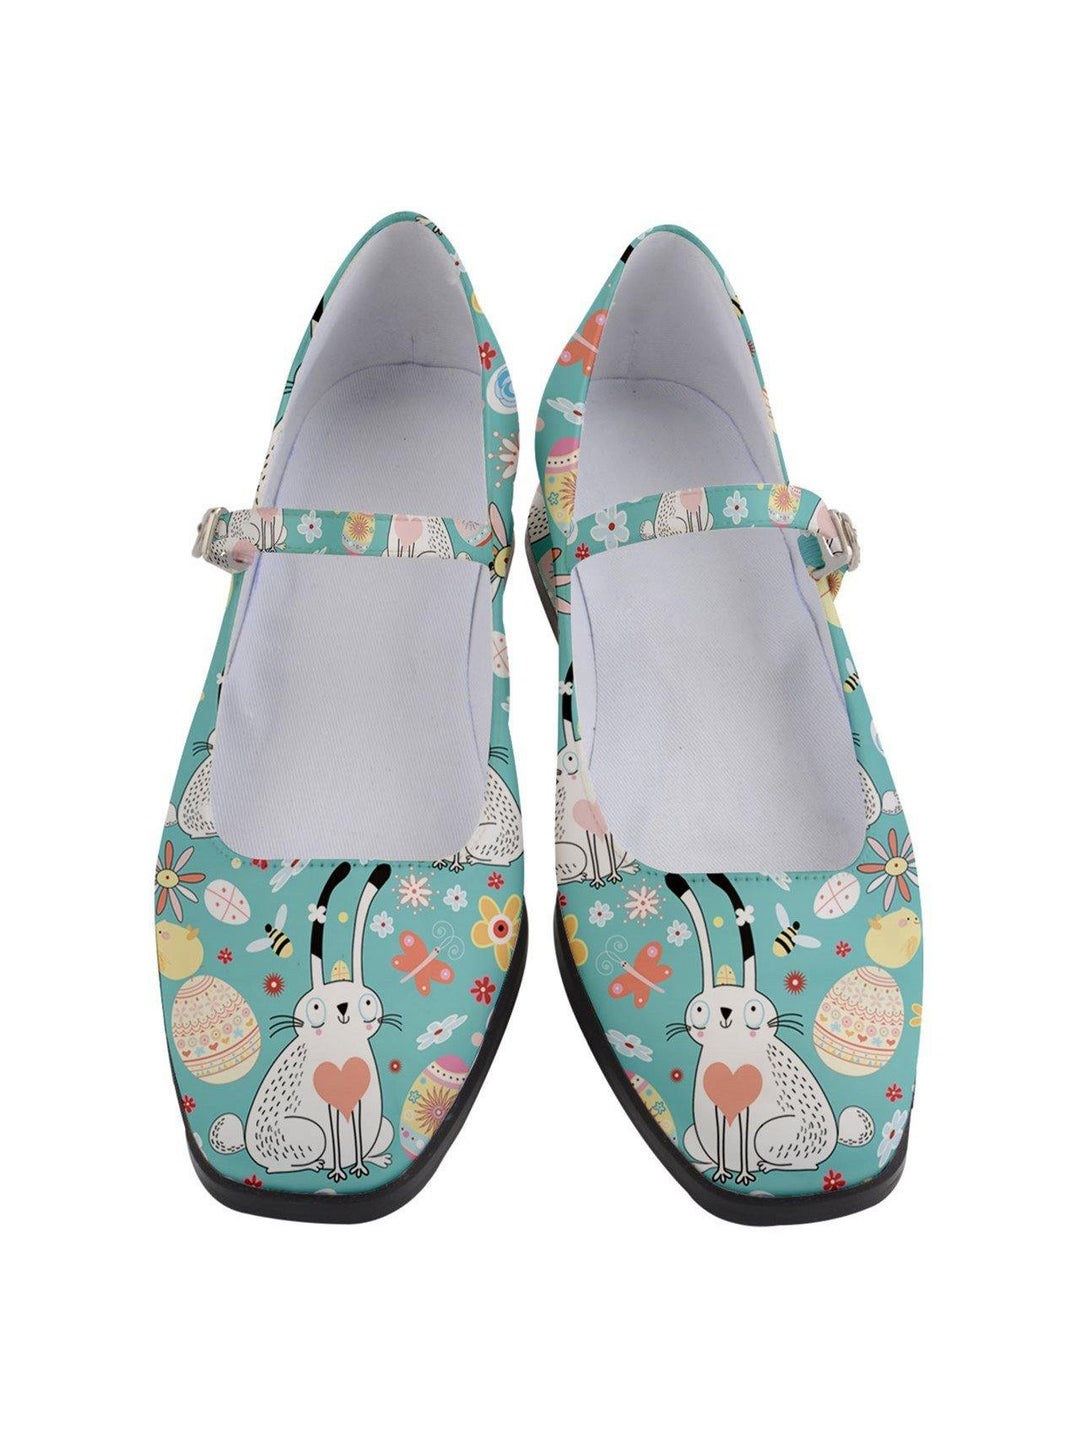 Bunny Love Women's Mary Jane Shoes